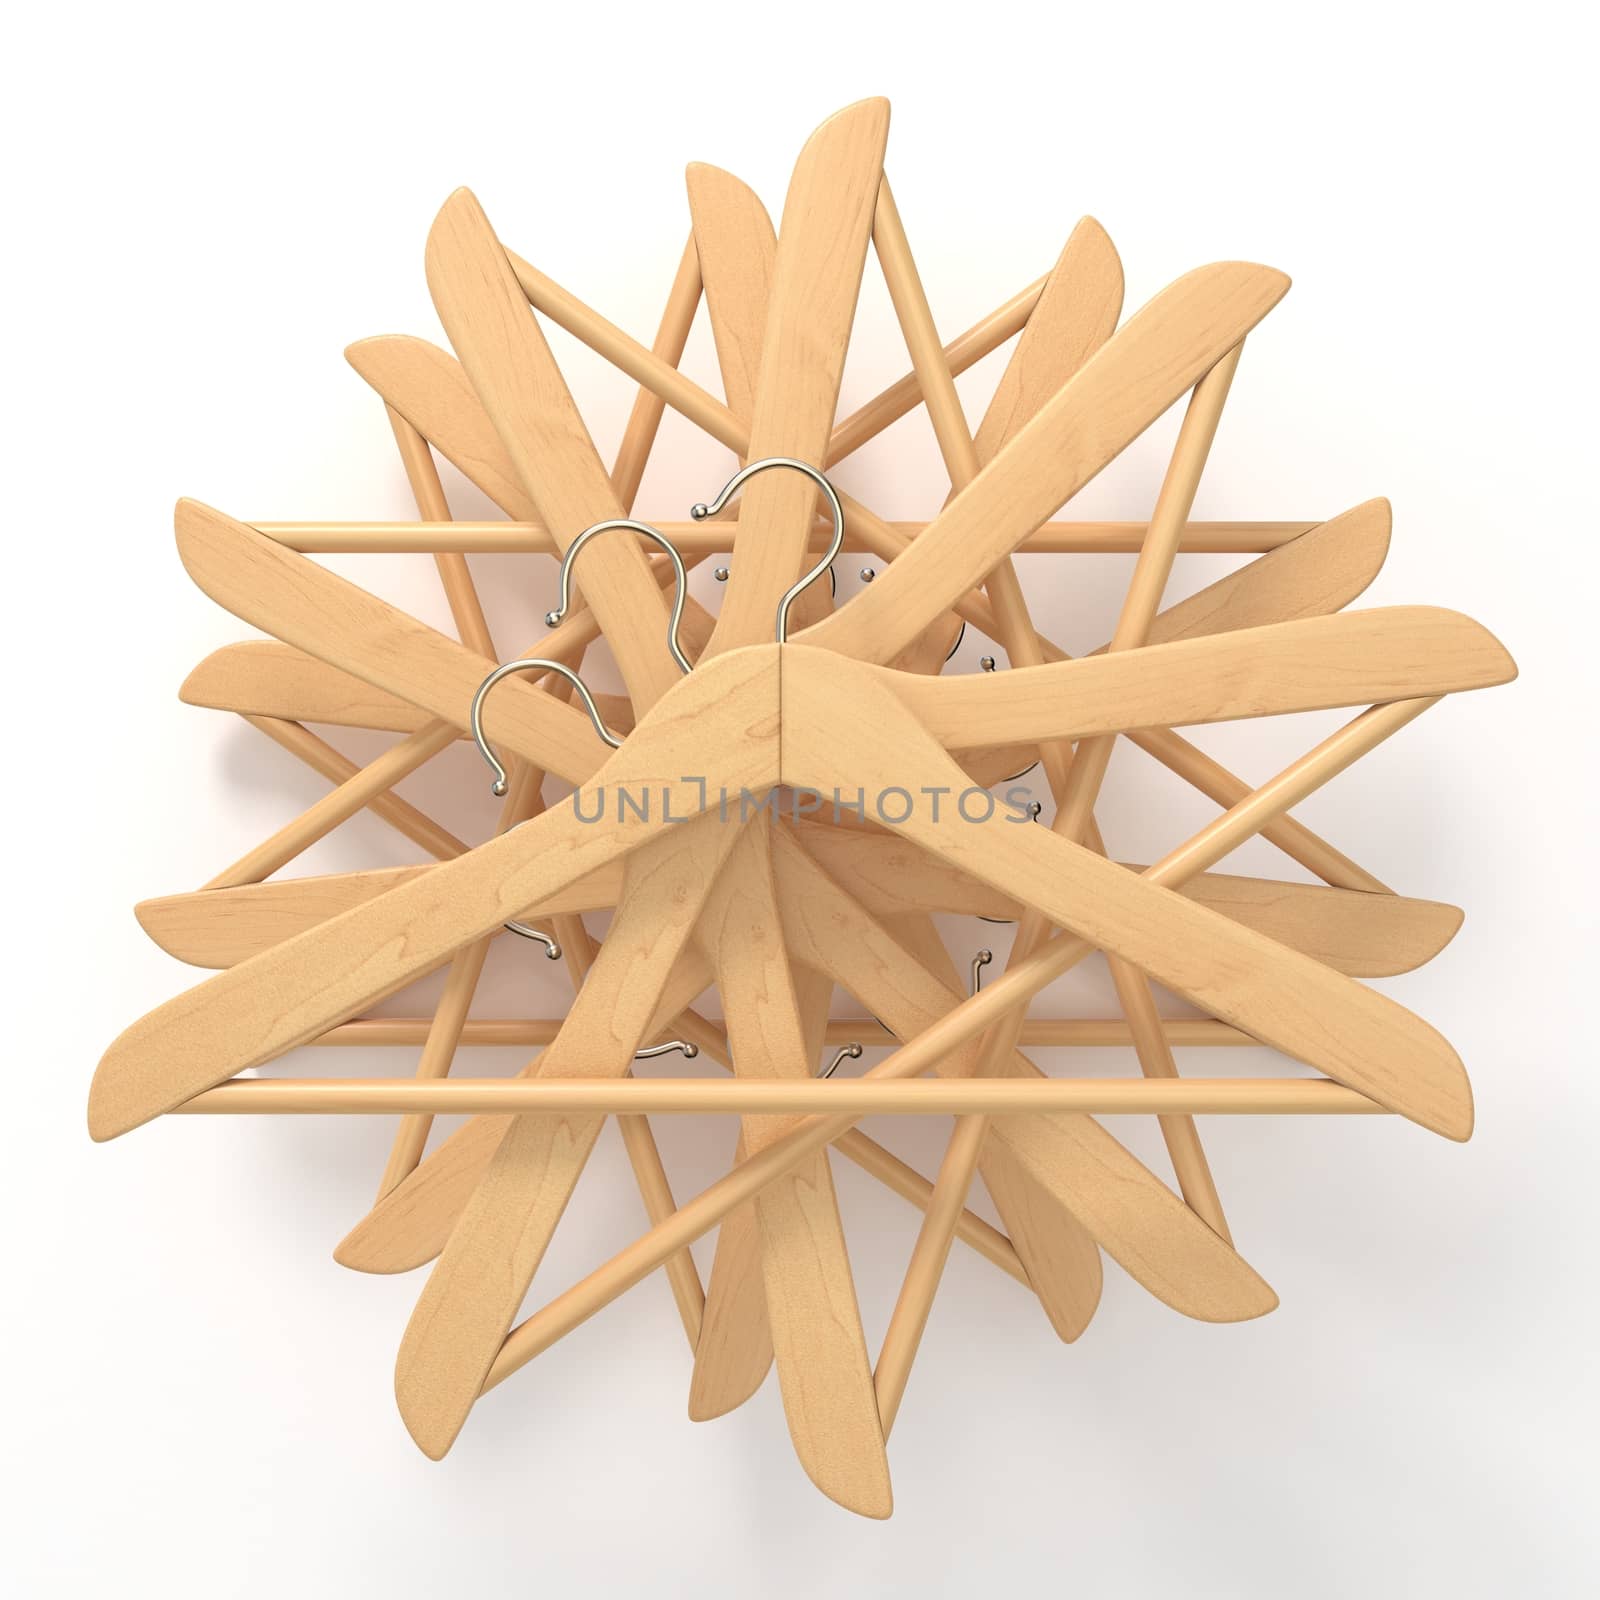 Wooden hangers, star arranged. 3D render illustration isolated on white background